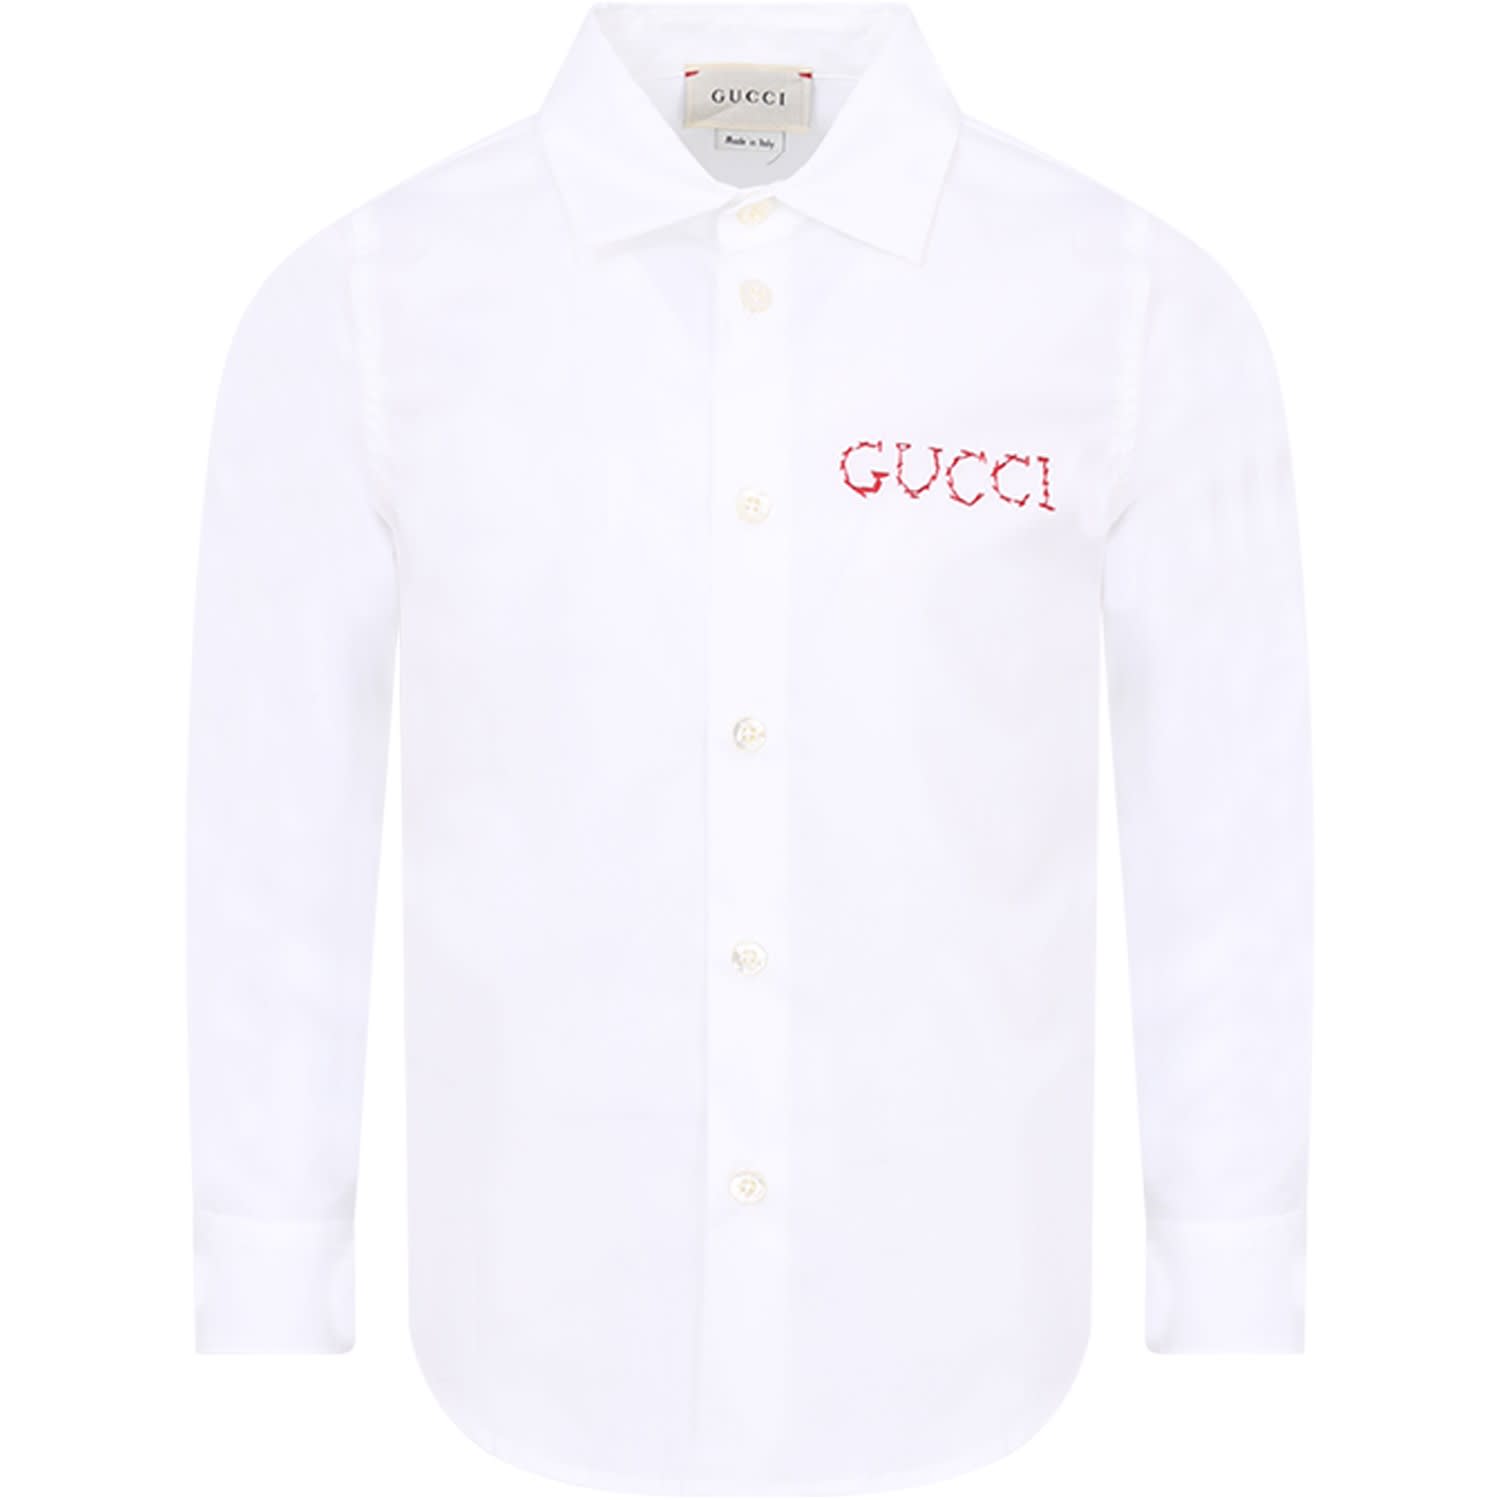 gucci white shirt price